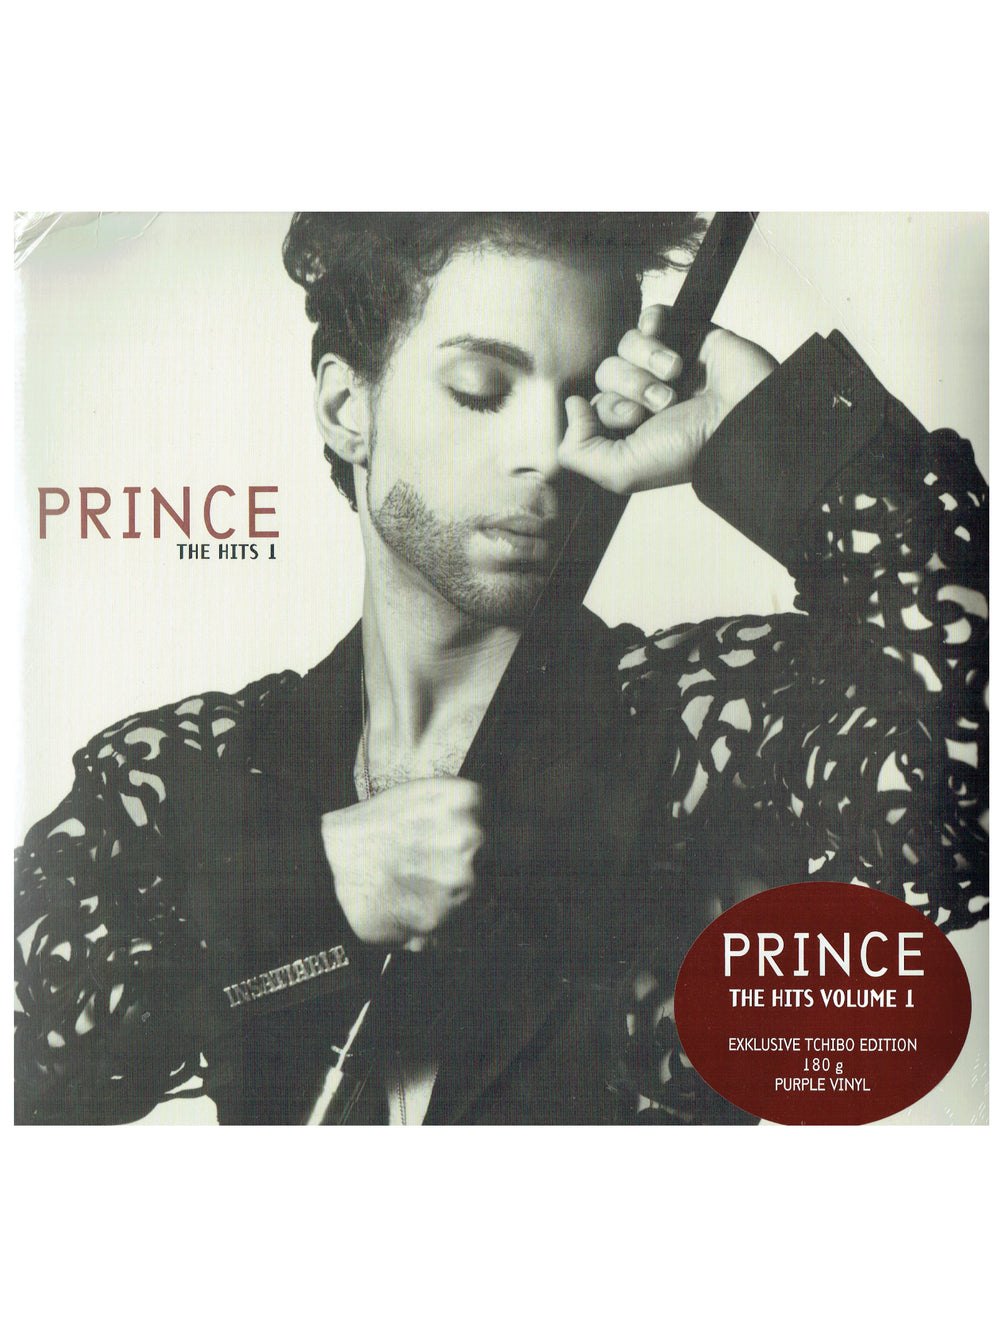 Prince – The Hits 1 Official Vinyl Double Album Exclusive 180 G Purple Vinyl Brand New